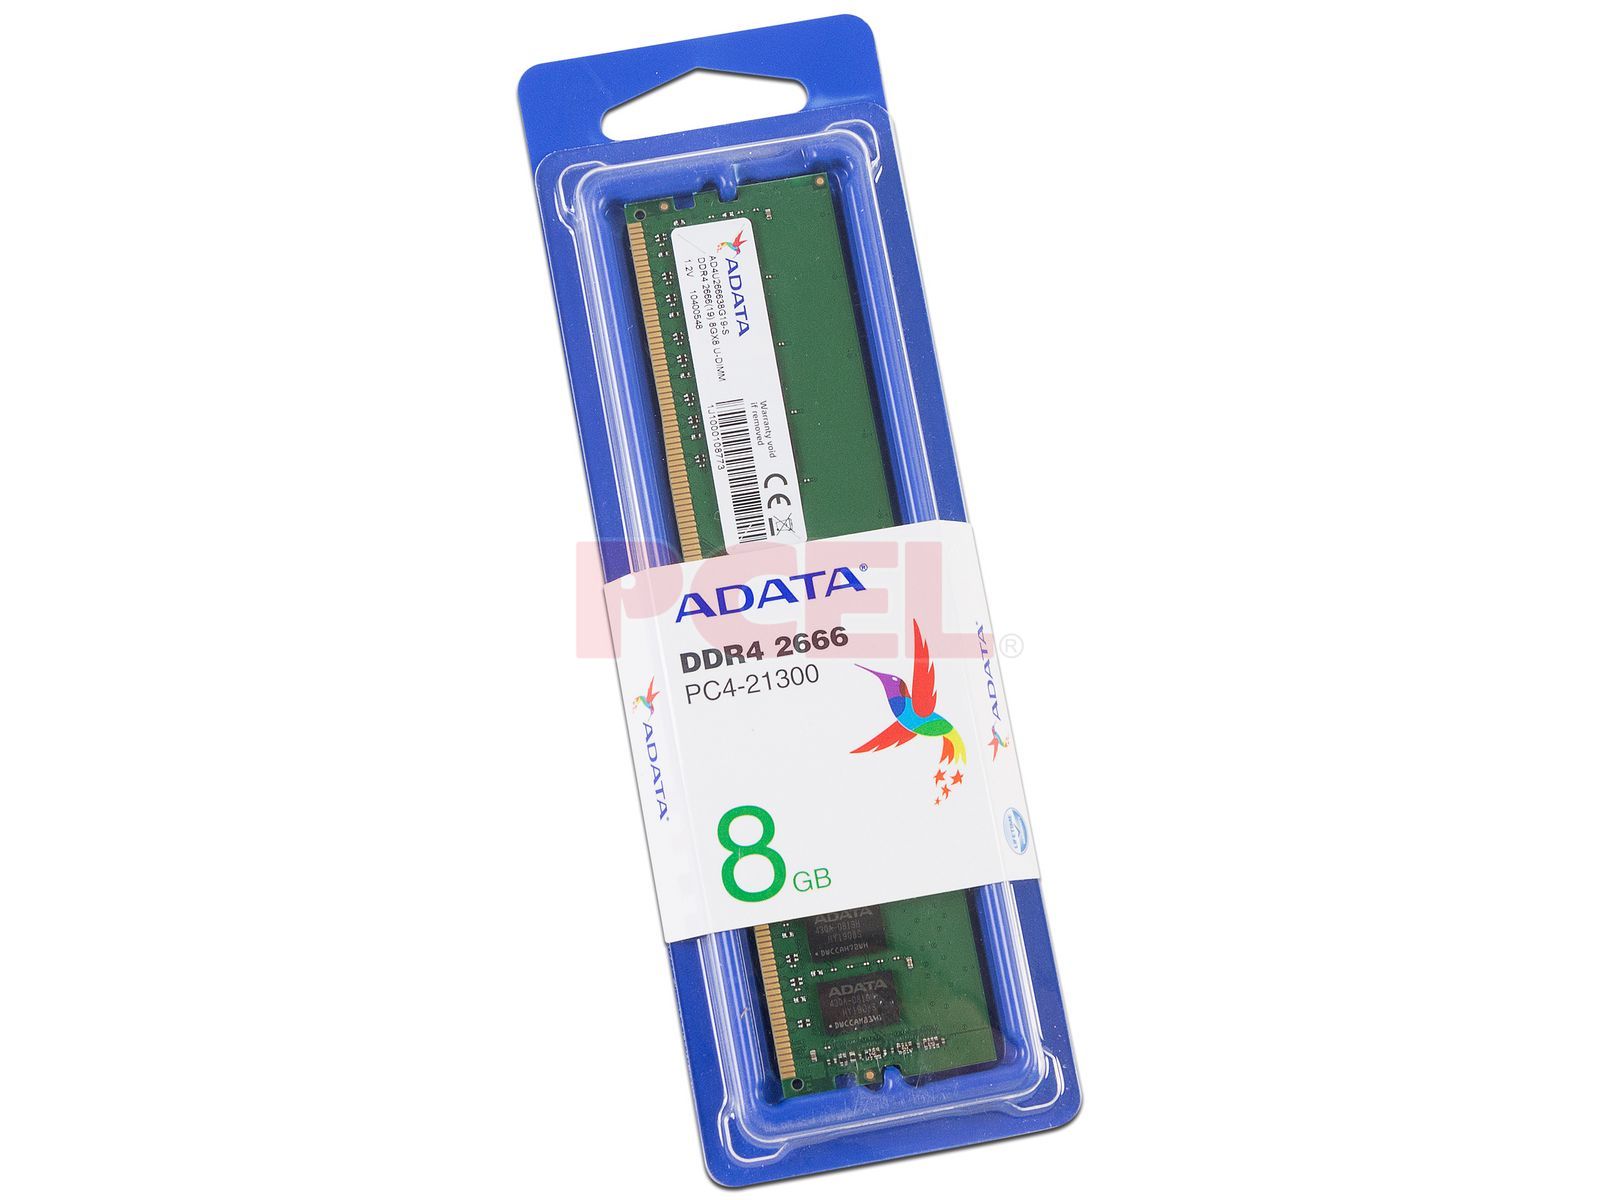 Amado reservorio para mi Memoria UDIMM ADATA Premier DDR4 PC4-21300(2666MHz), CL19, 8GB.